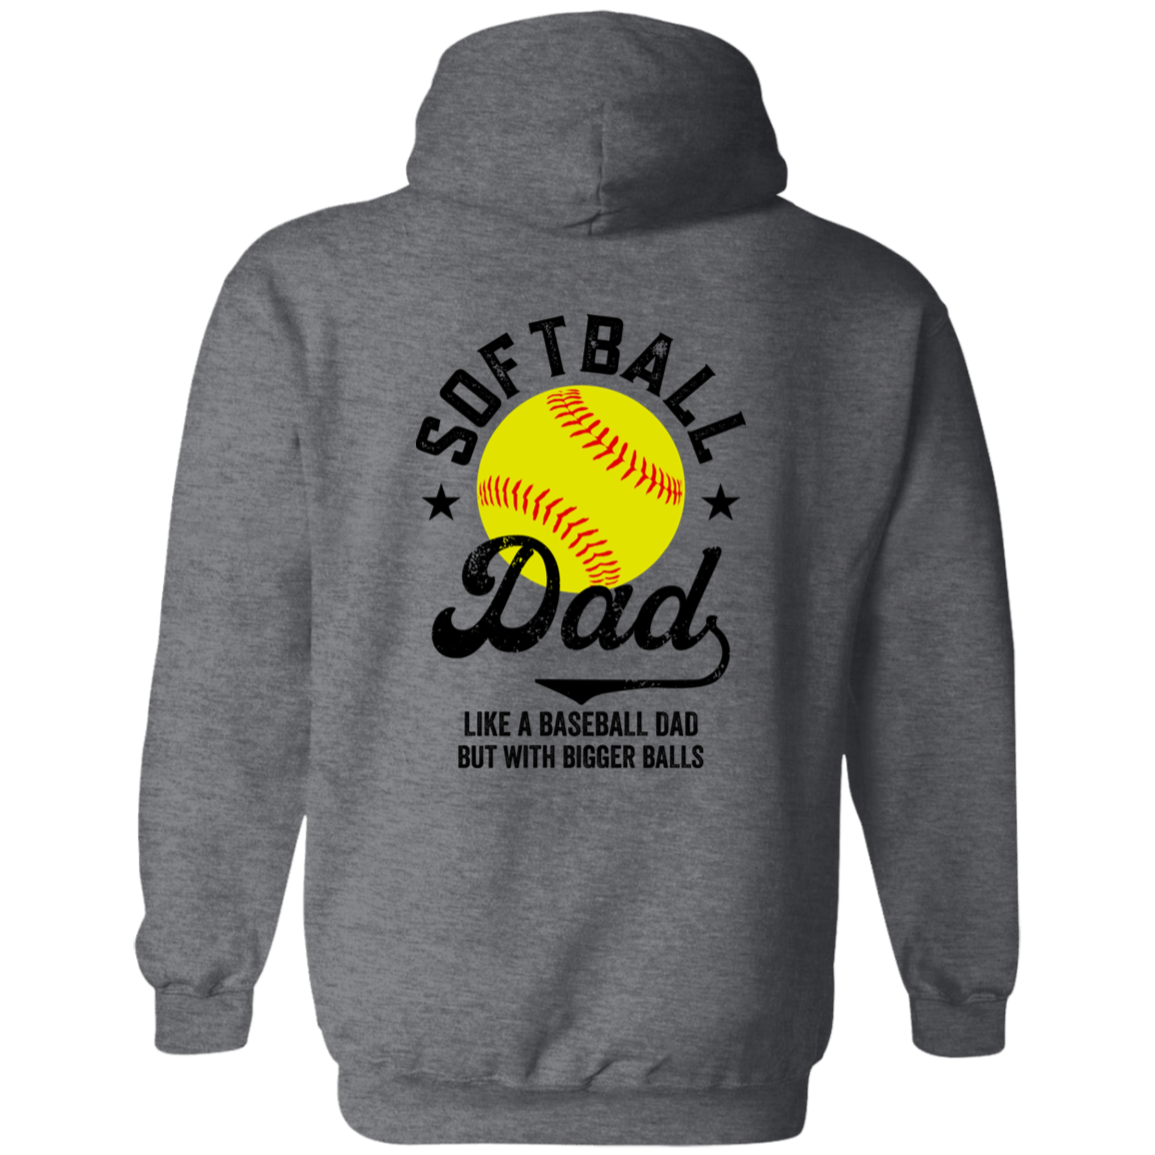 Softball Dad Full-Zip Hooded Sweatshirt